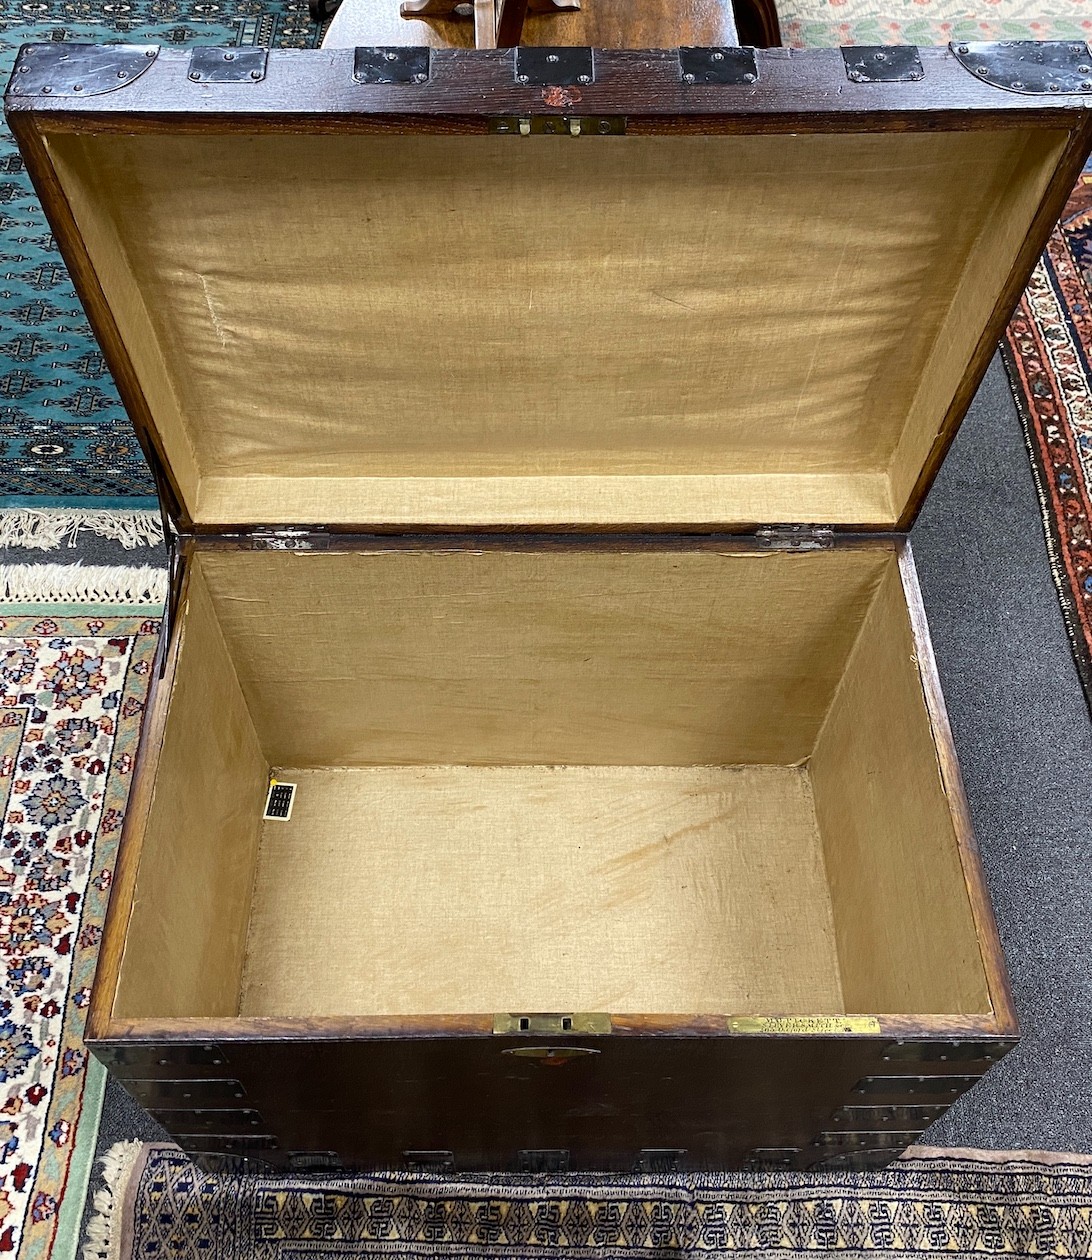 A Victorian iron bound oak silver chest, width 71cm, depth 48cm, height 55cm